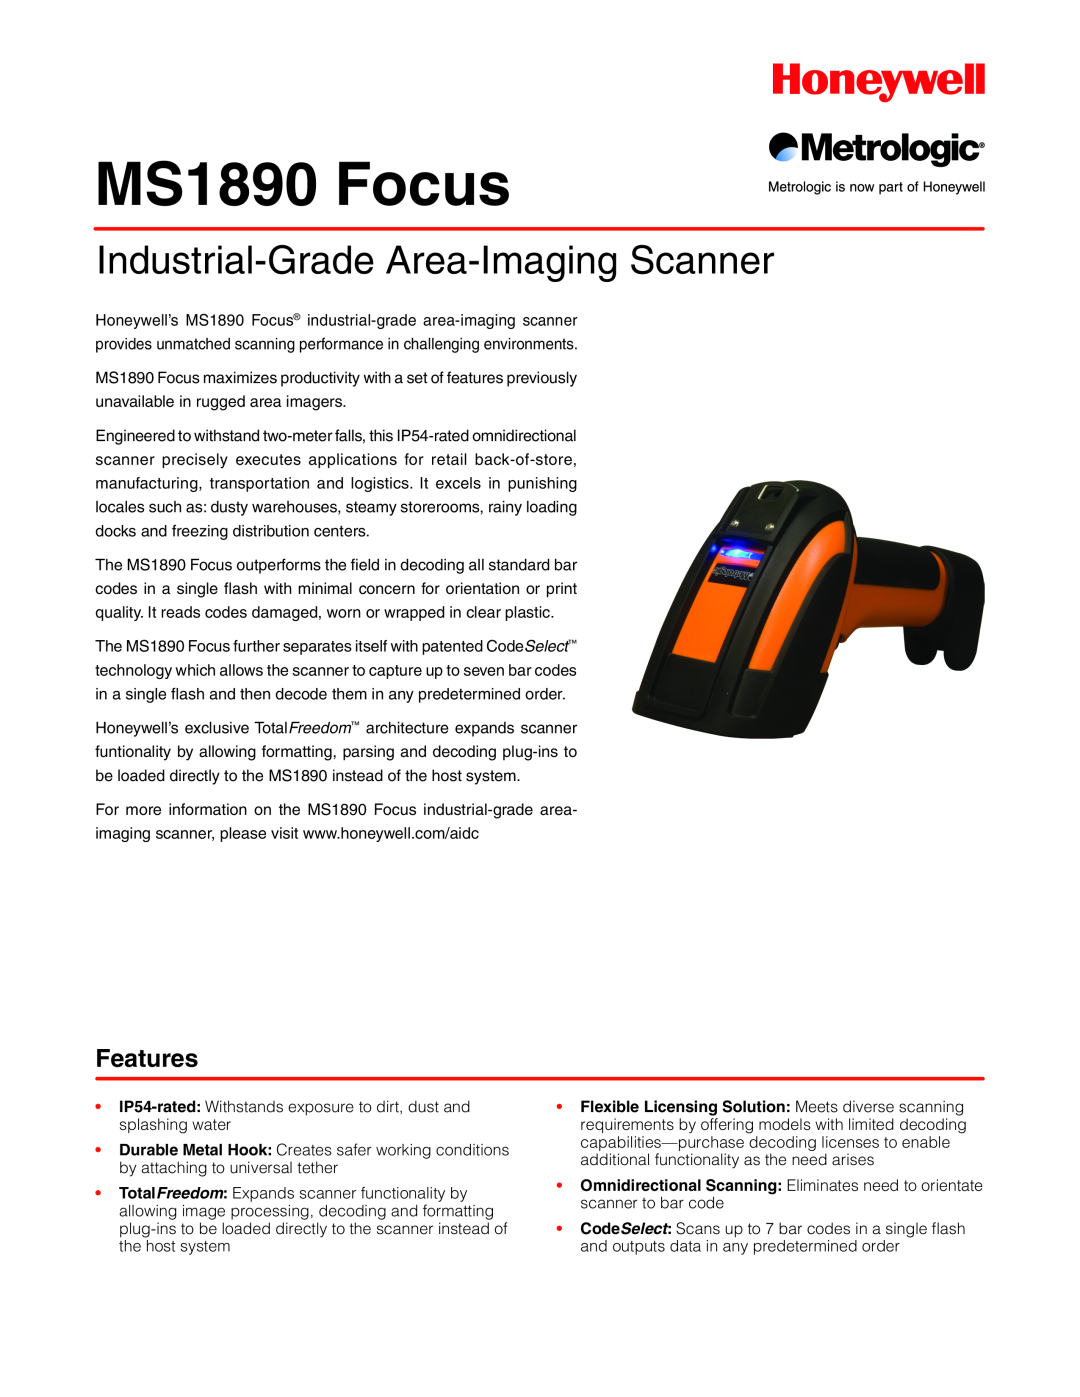 Metrologic Instruments MS1890 Focus manual Industrial-Grade Area-Imaging Scanner, Features 